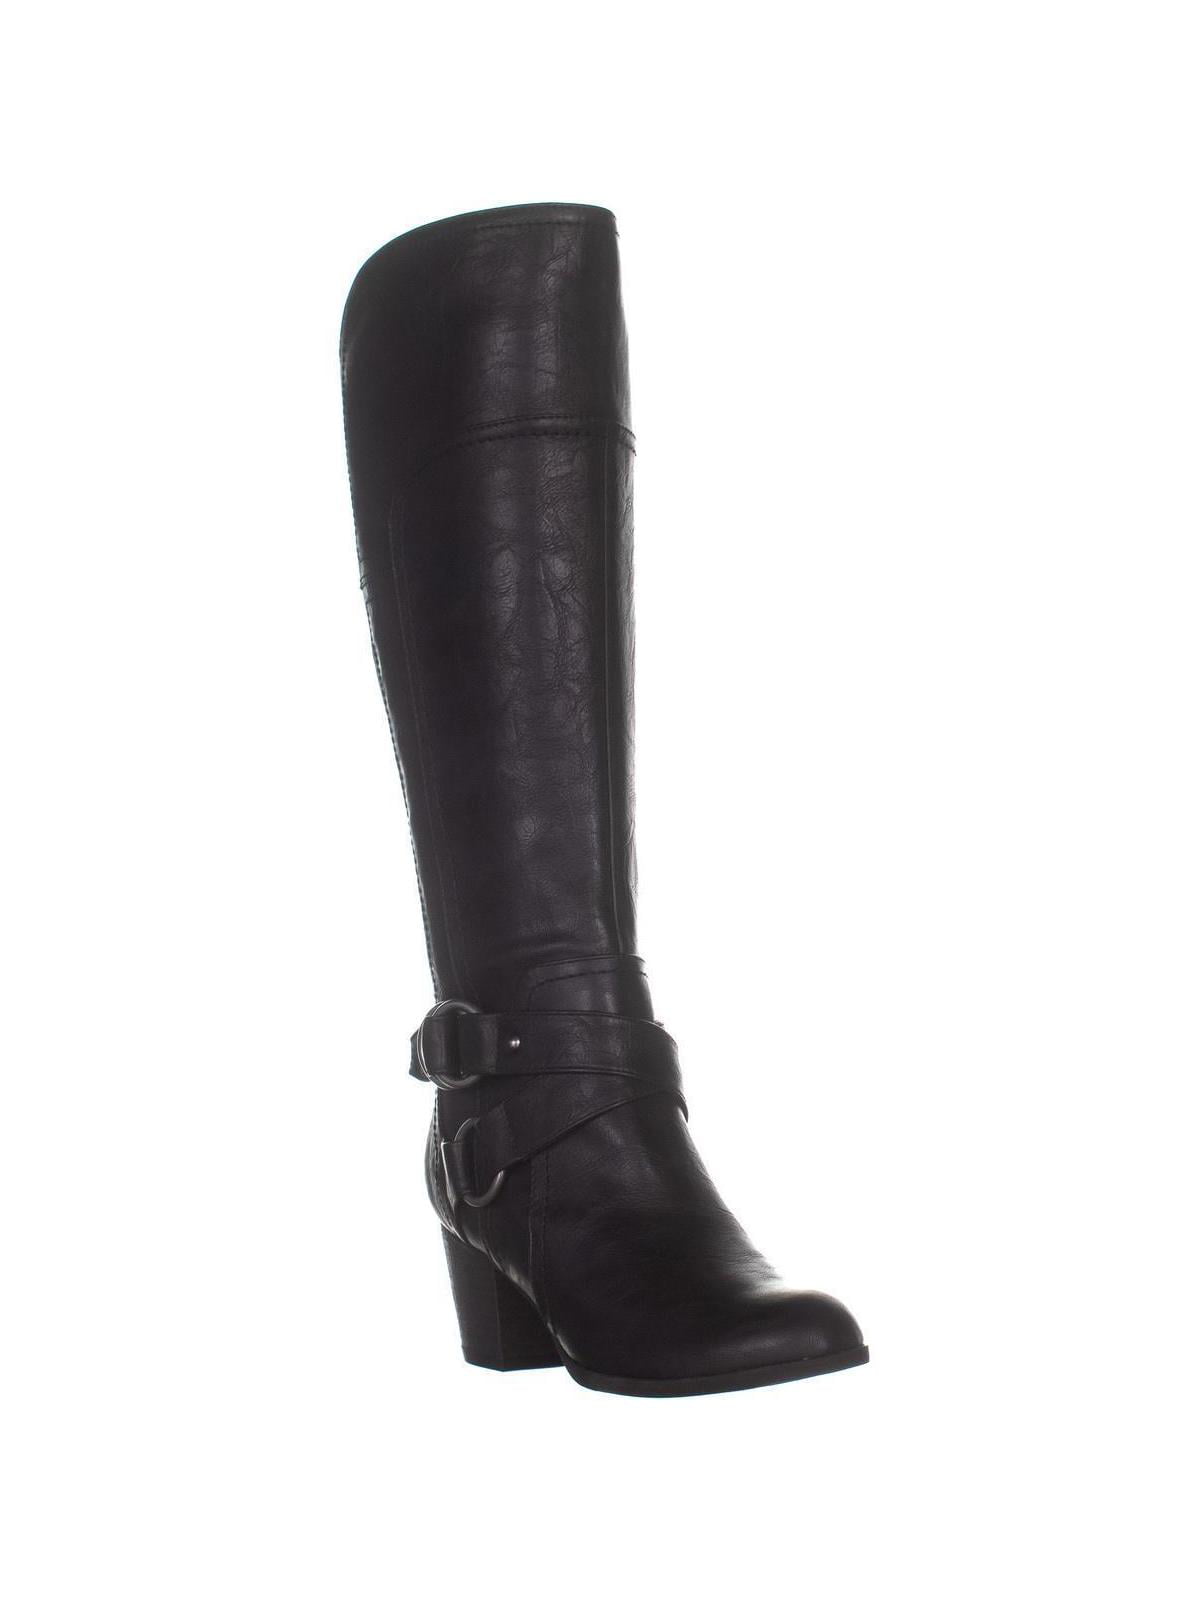 Indigo Rd. - Womens Indigo Rd. Simona Knee-High Boots, Black, 8 US ...